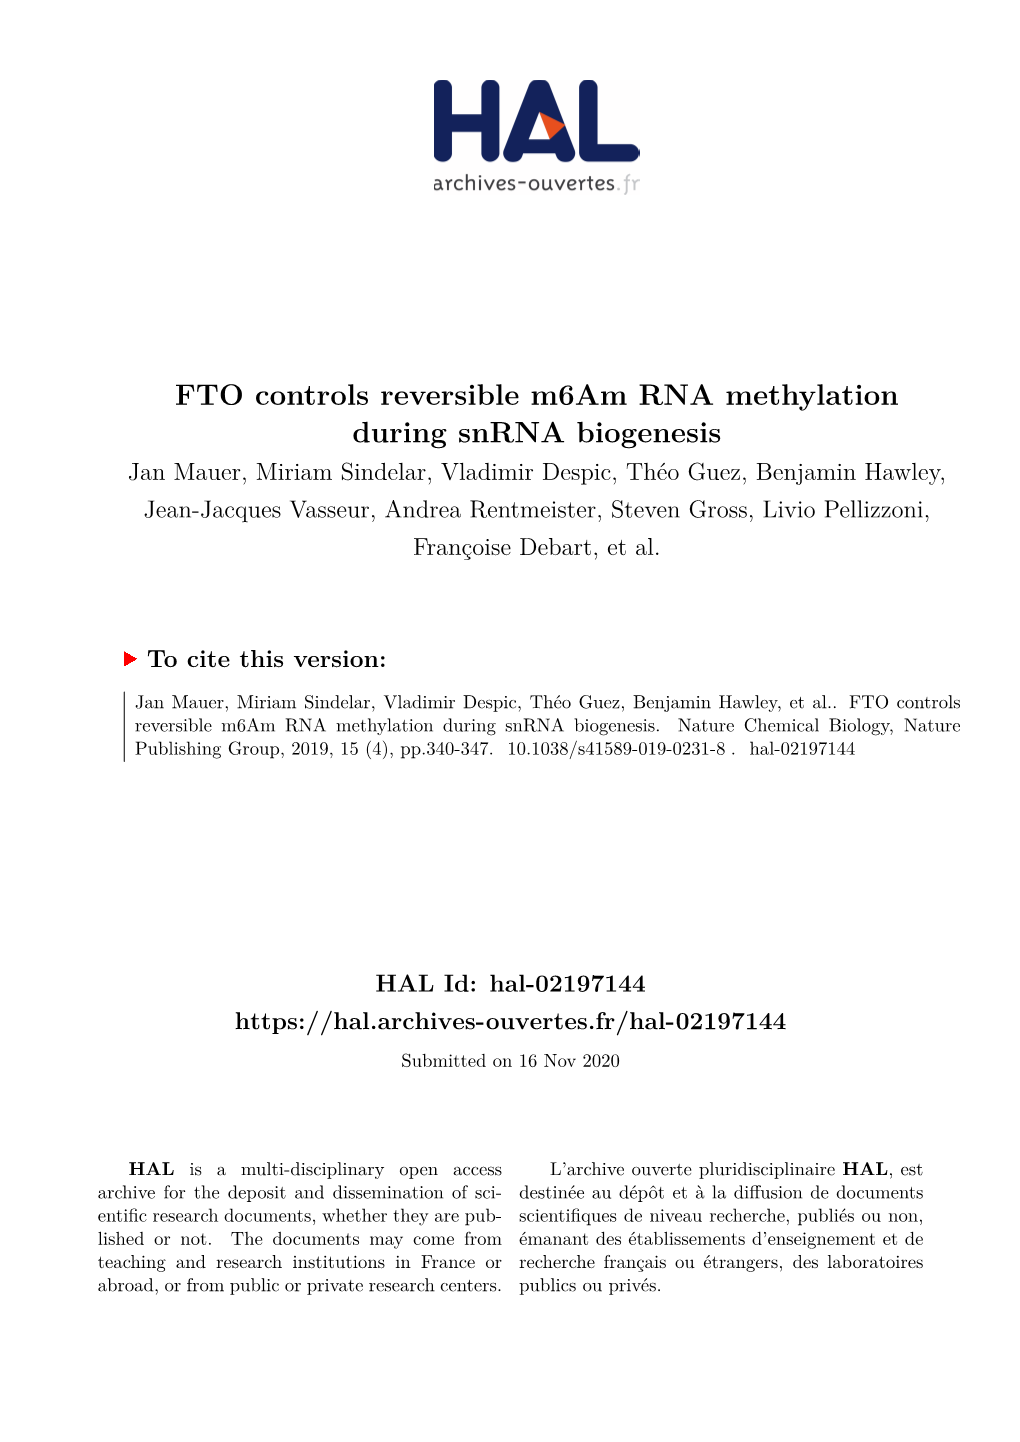 FTO Controls Reversible M6am RNA Methylation During Snrna Biogenesis